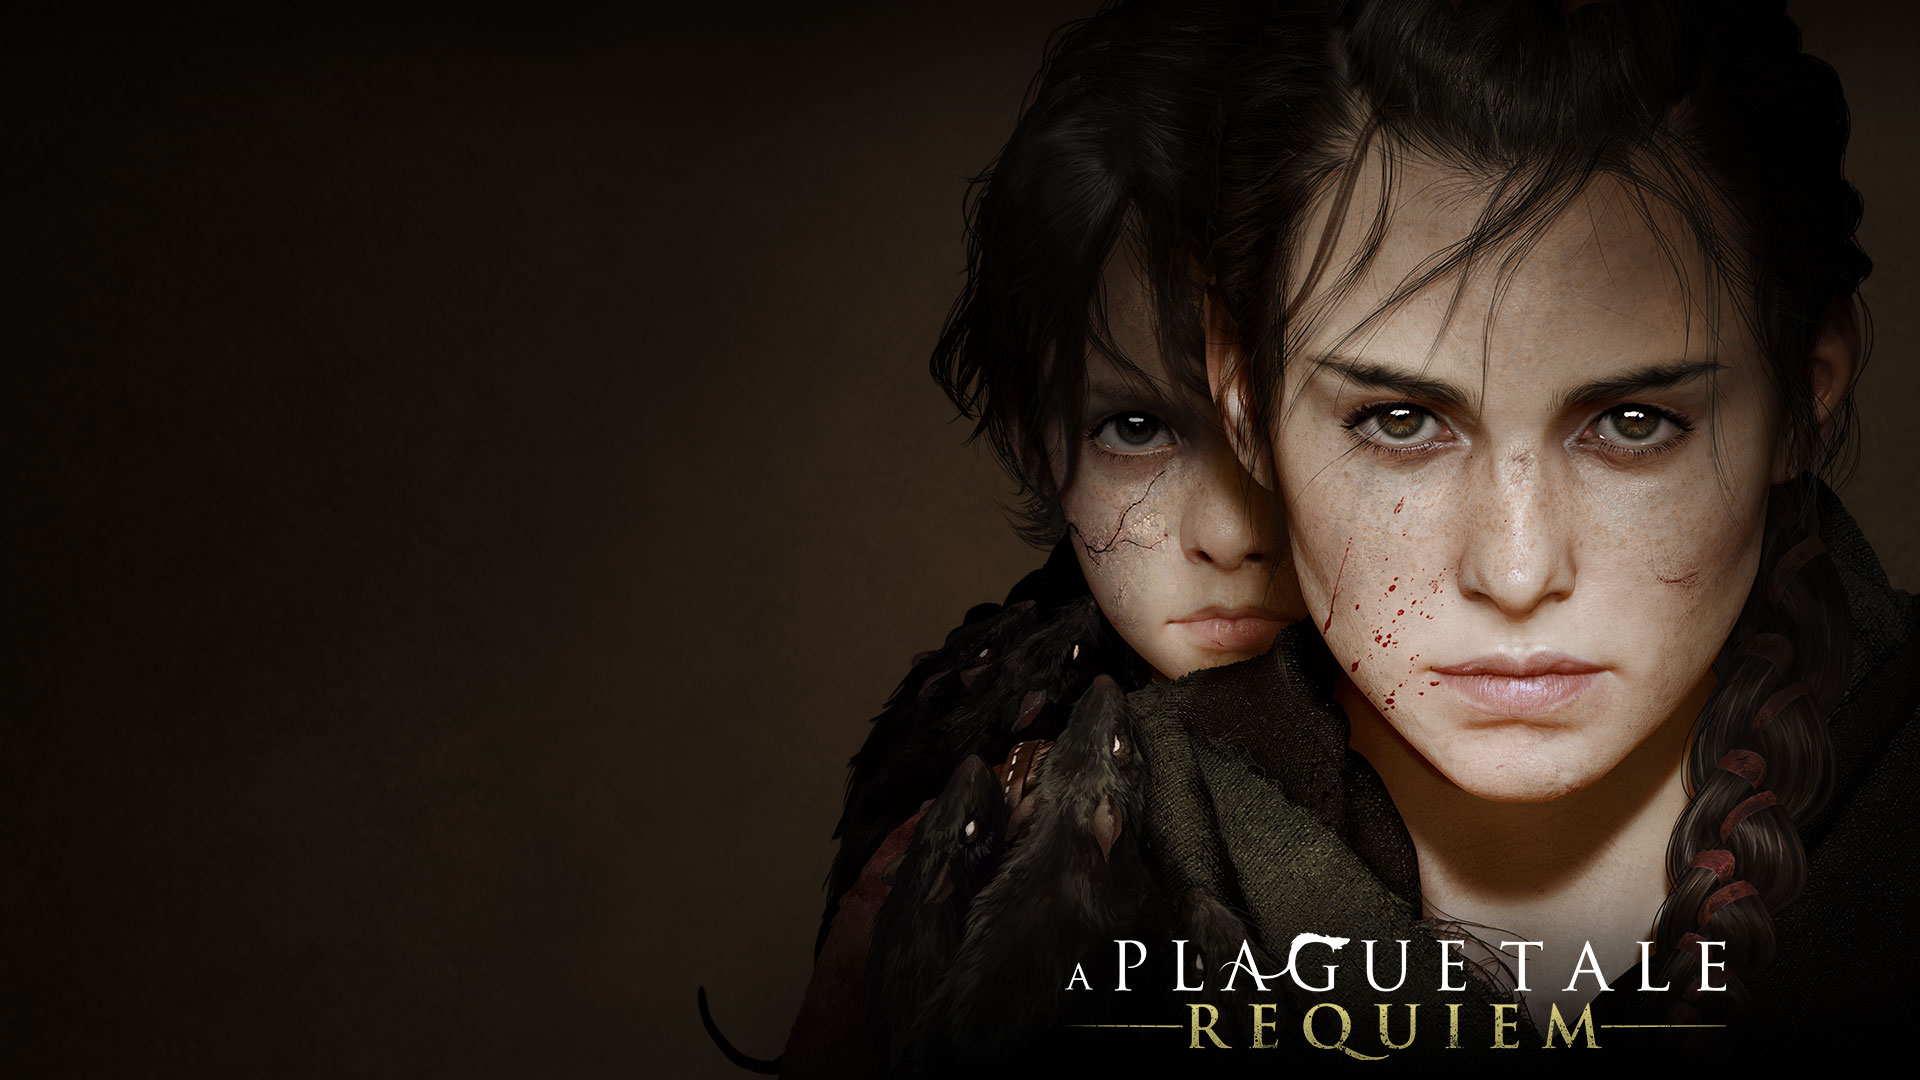 A Plague Tale: Innocence - 4K UHD for PS5 & Xbox Series X